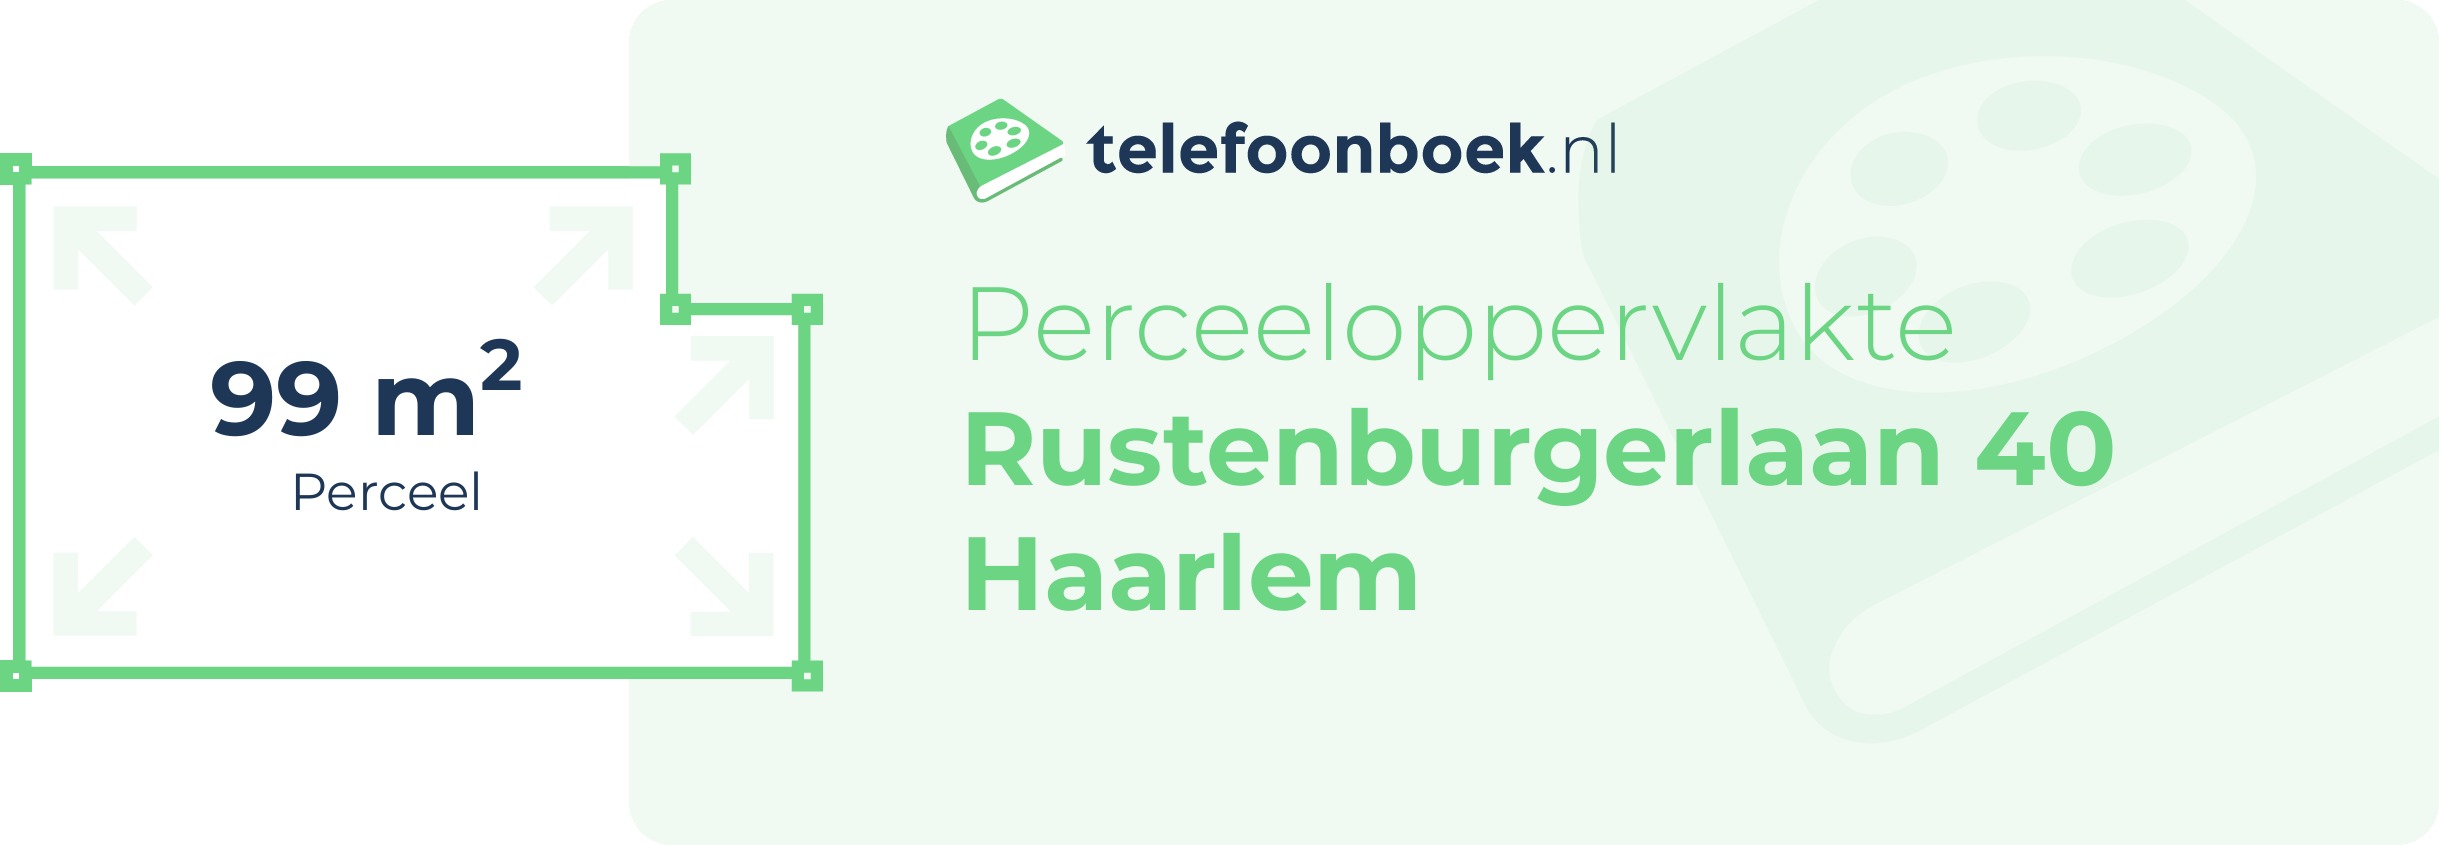 Perceeloppervlakte Rustenburgerlaan 40 Haarlem